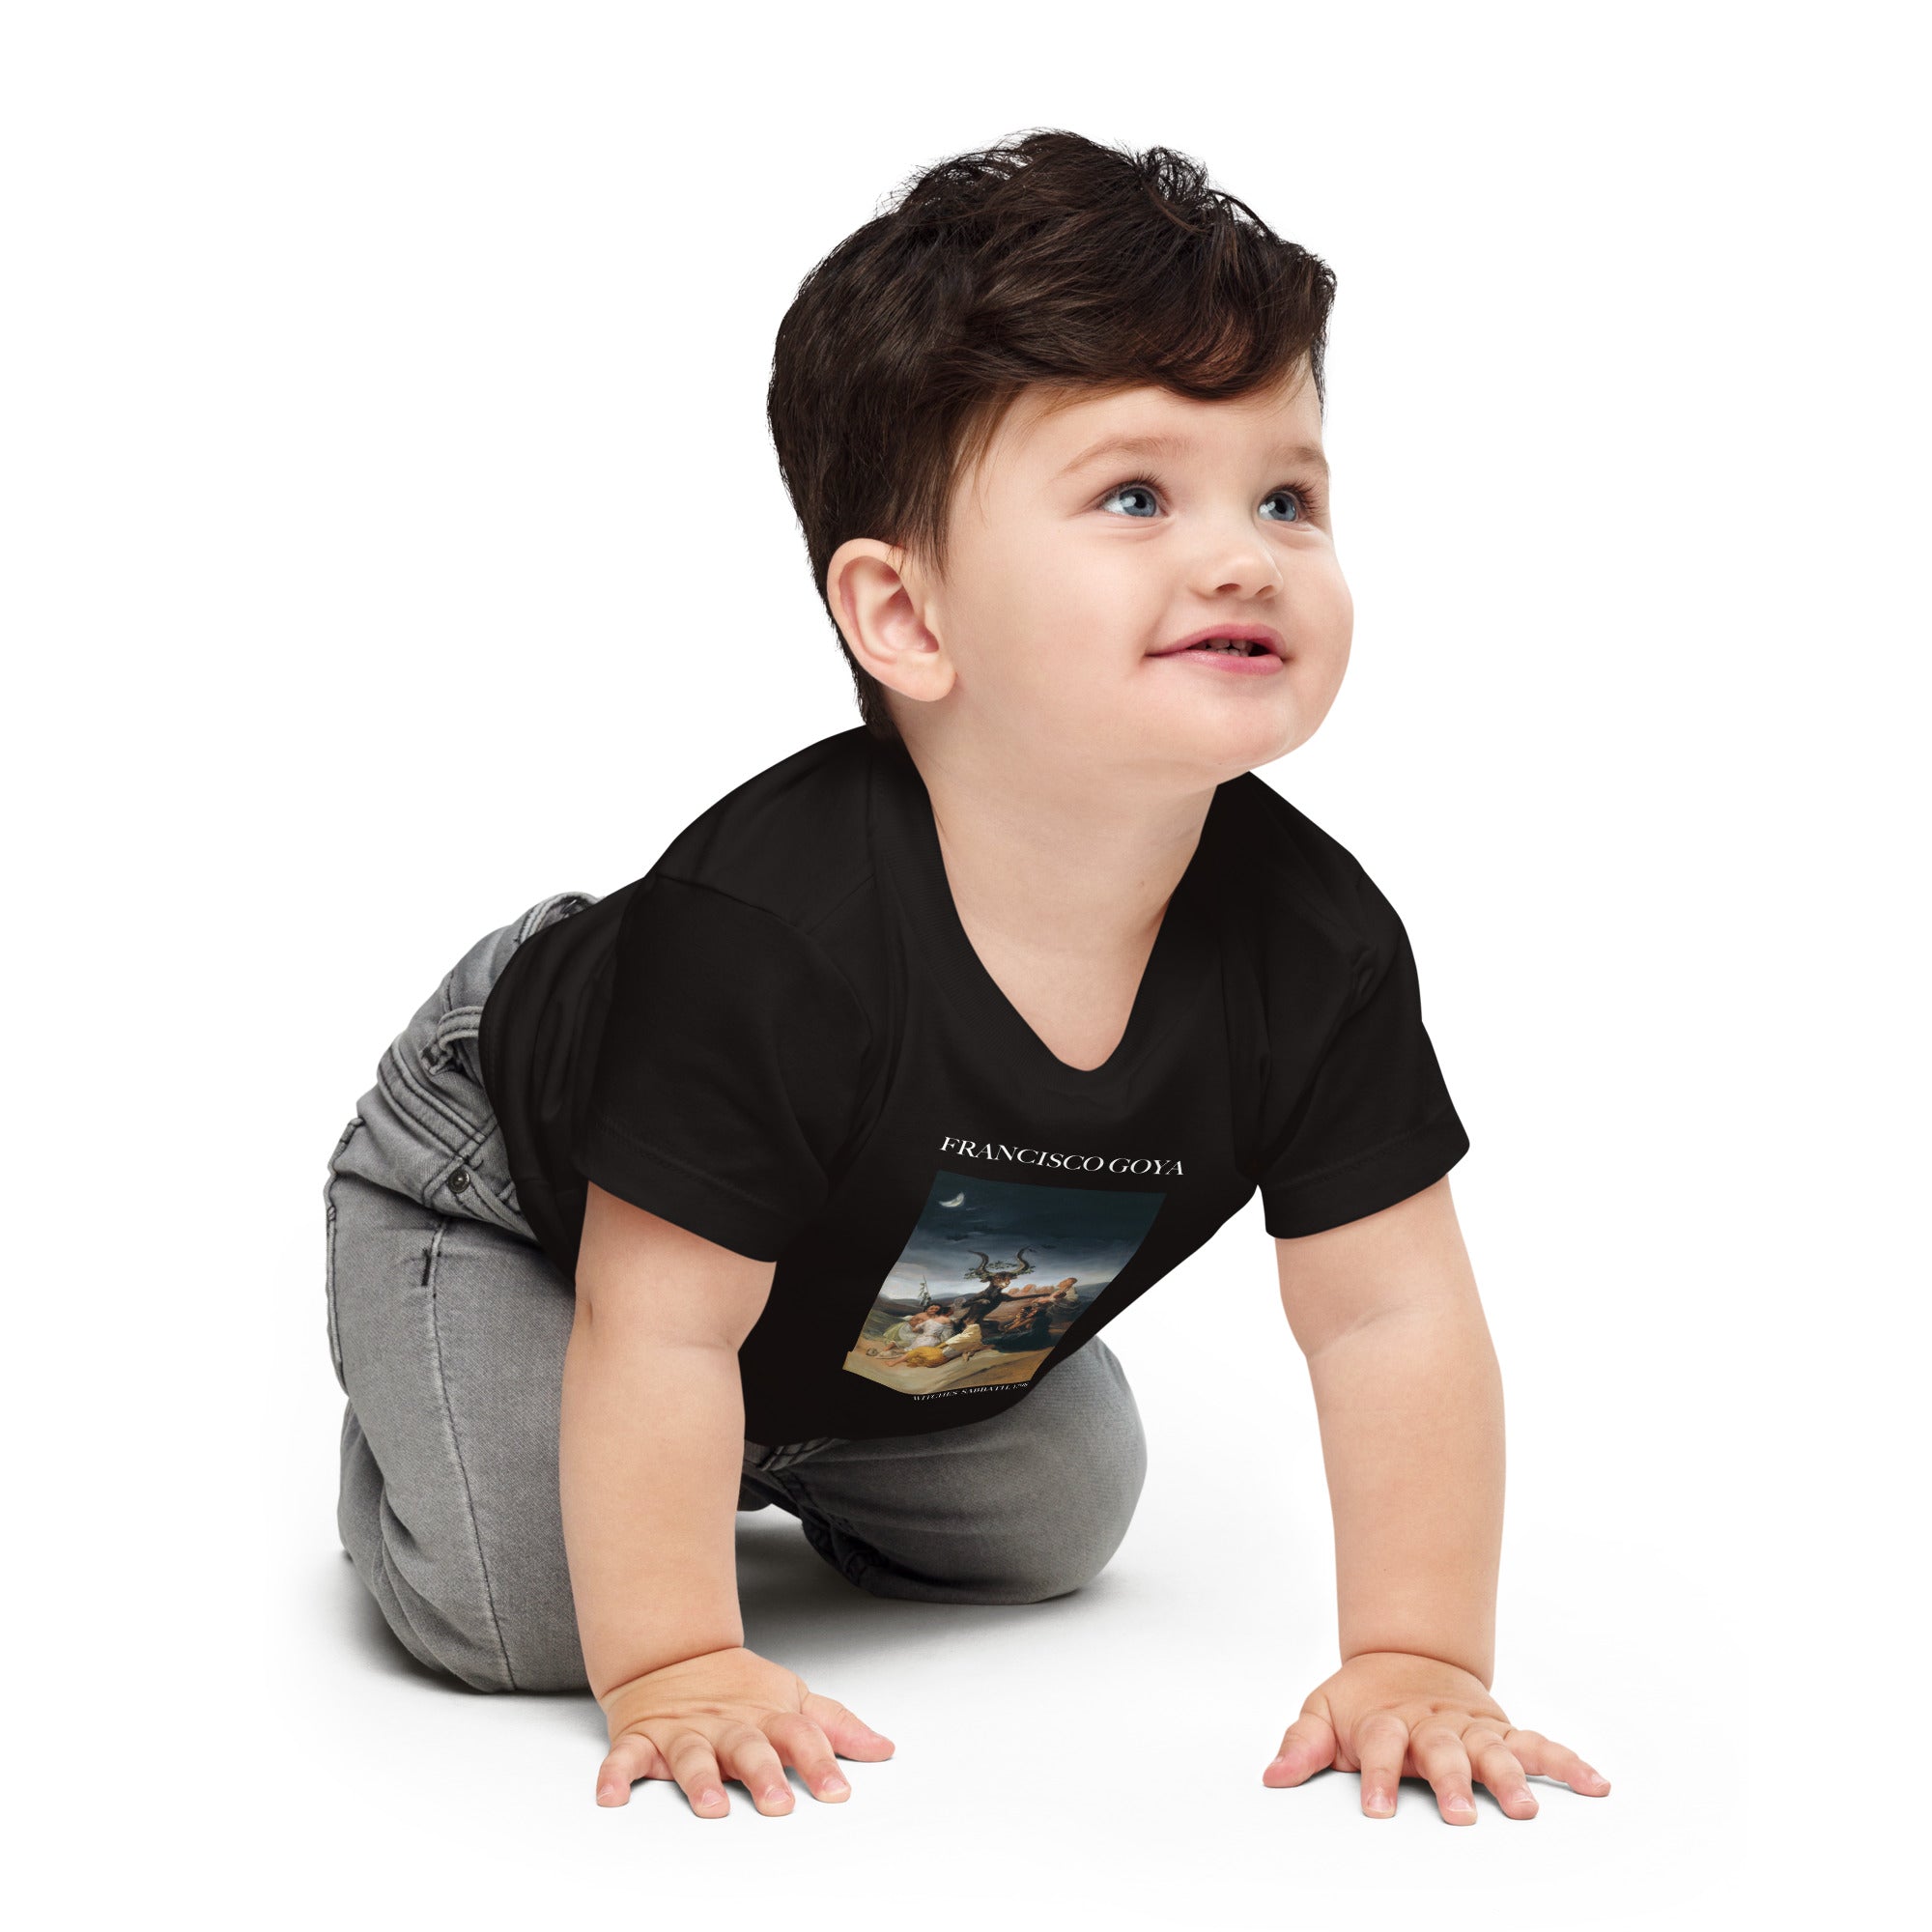 Francisco Goya 'Witches' Sabbath' Famous Painting Baby Staple T-Shirt | Premium Baby Art Tee